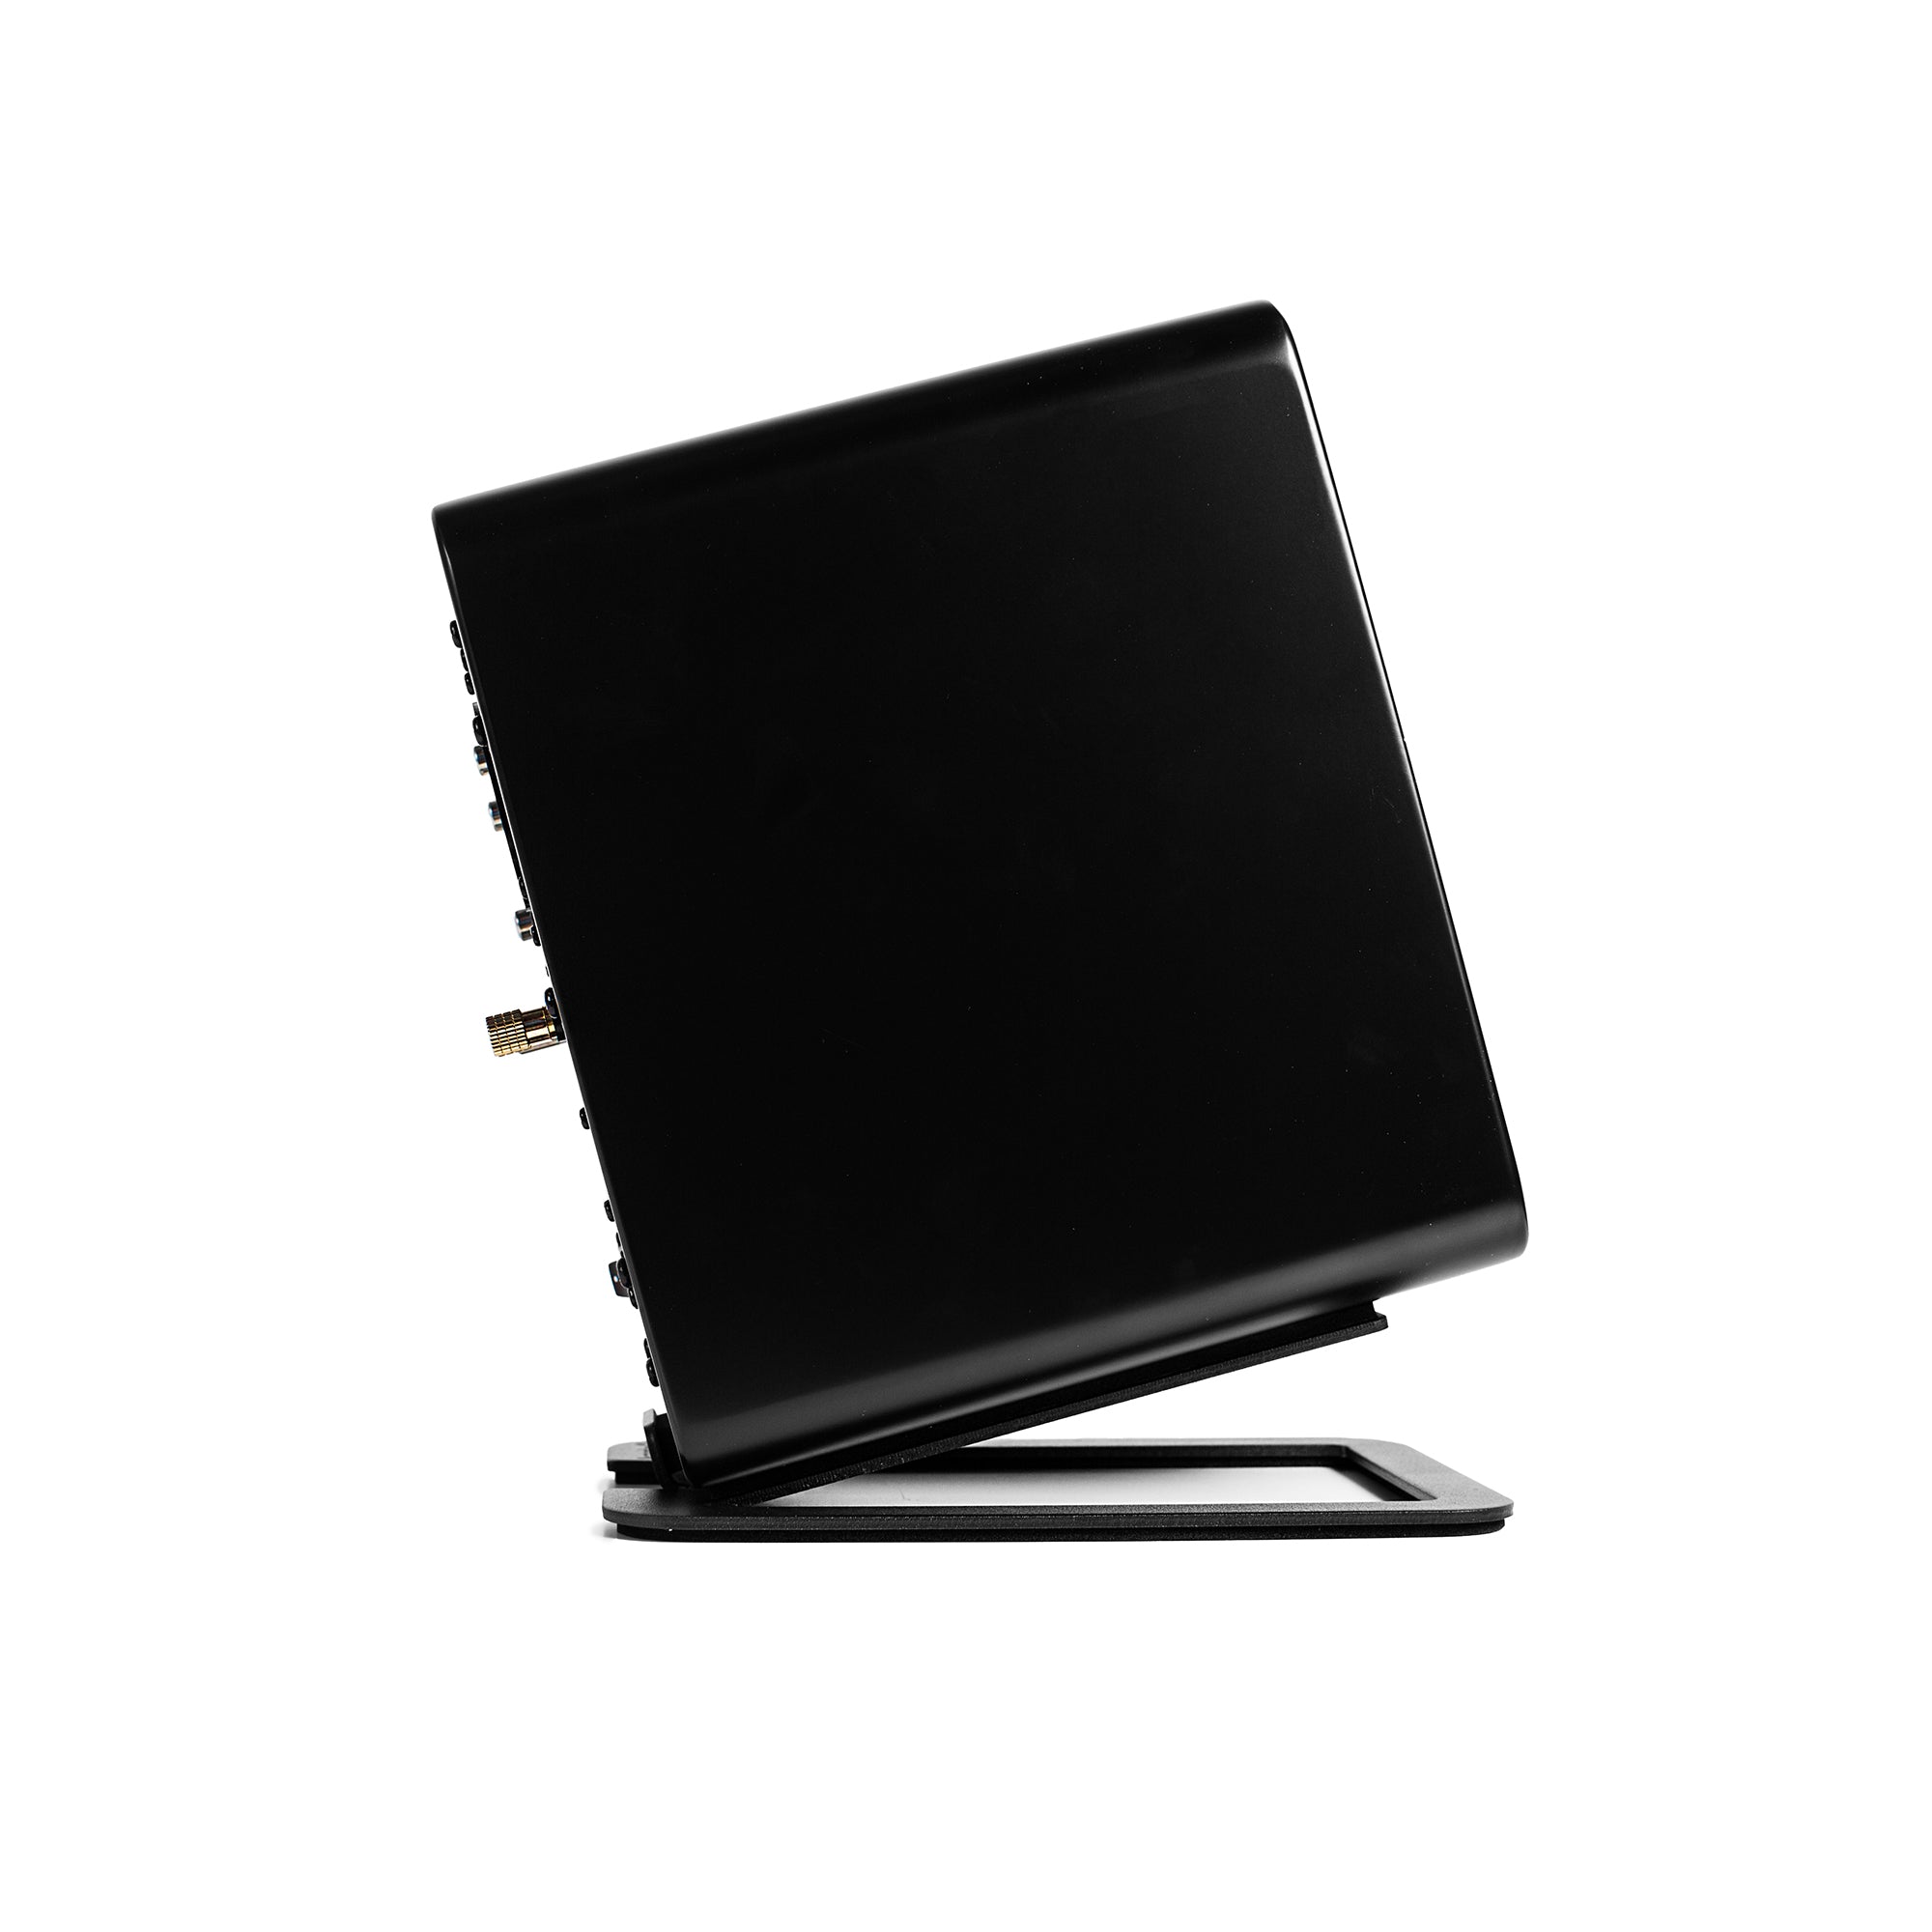 Kanto S4 Angled Desktop Speaker Stands for Midsize Speakers - Pair, Black